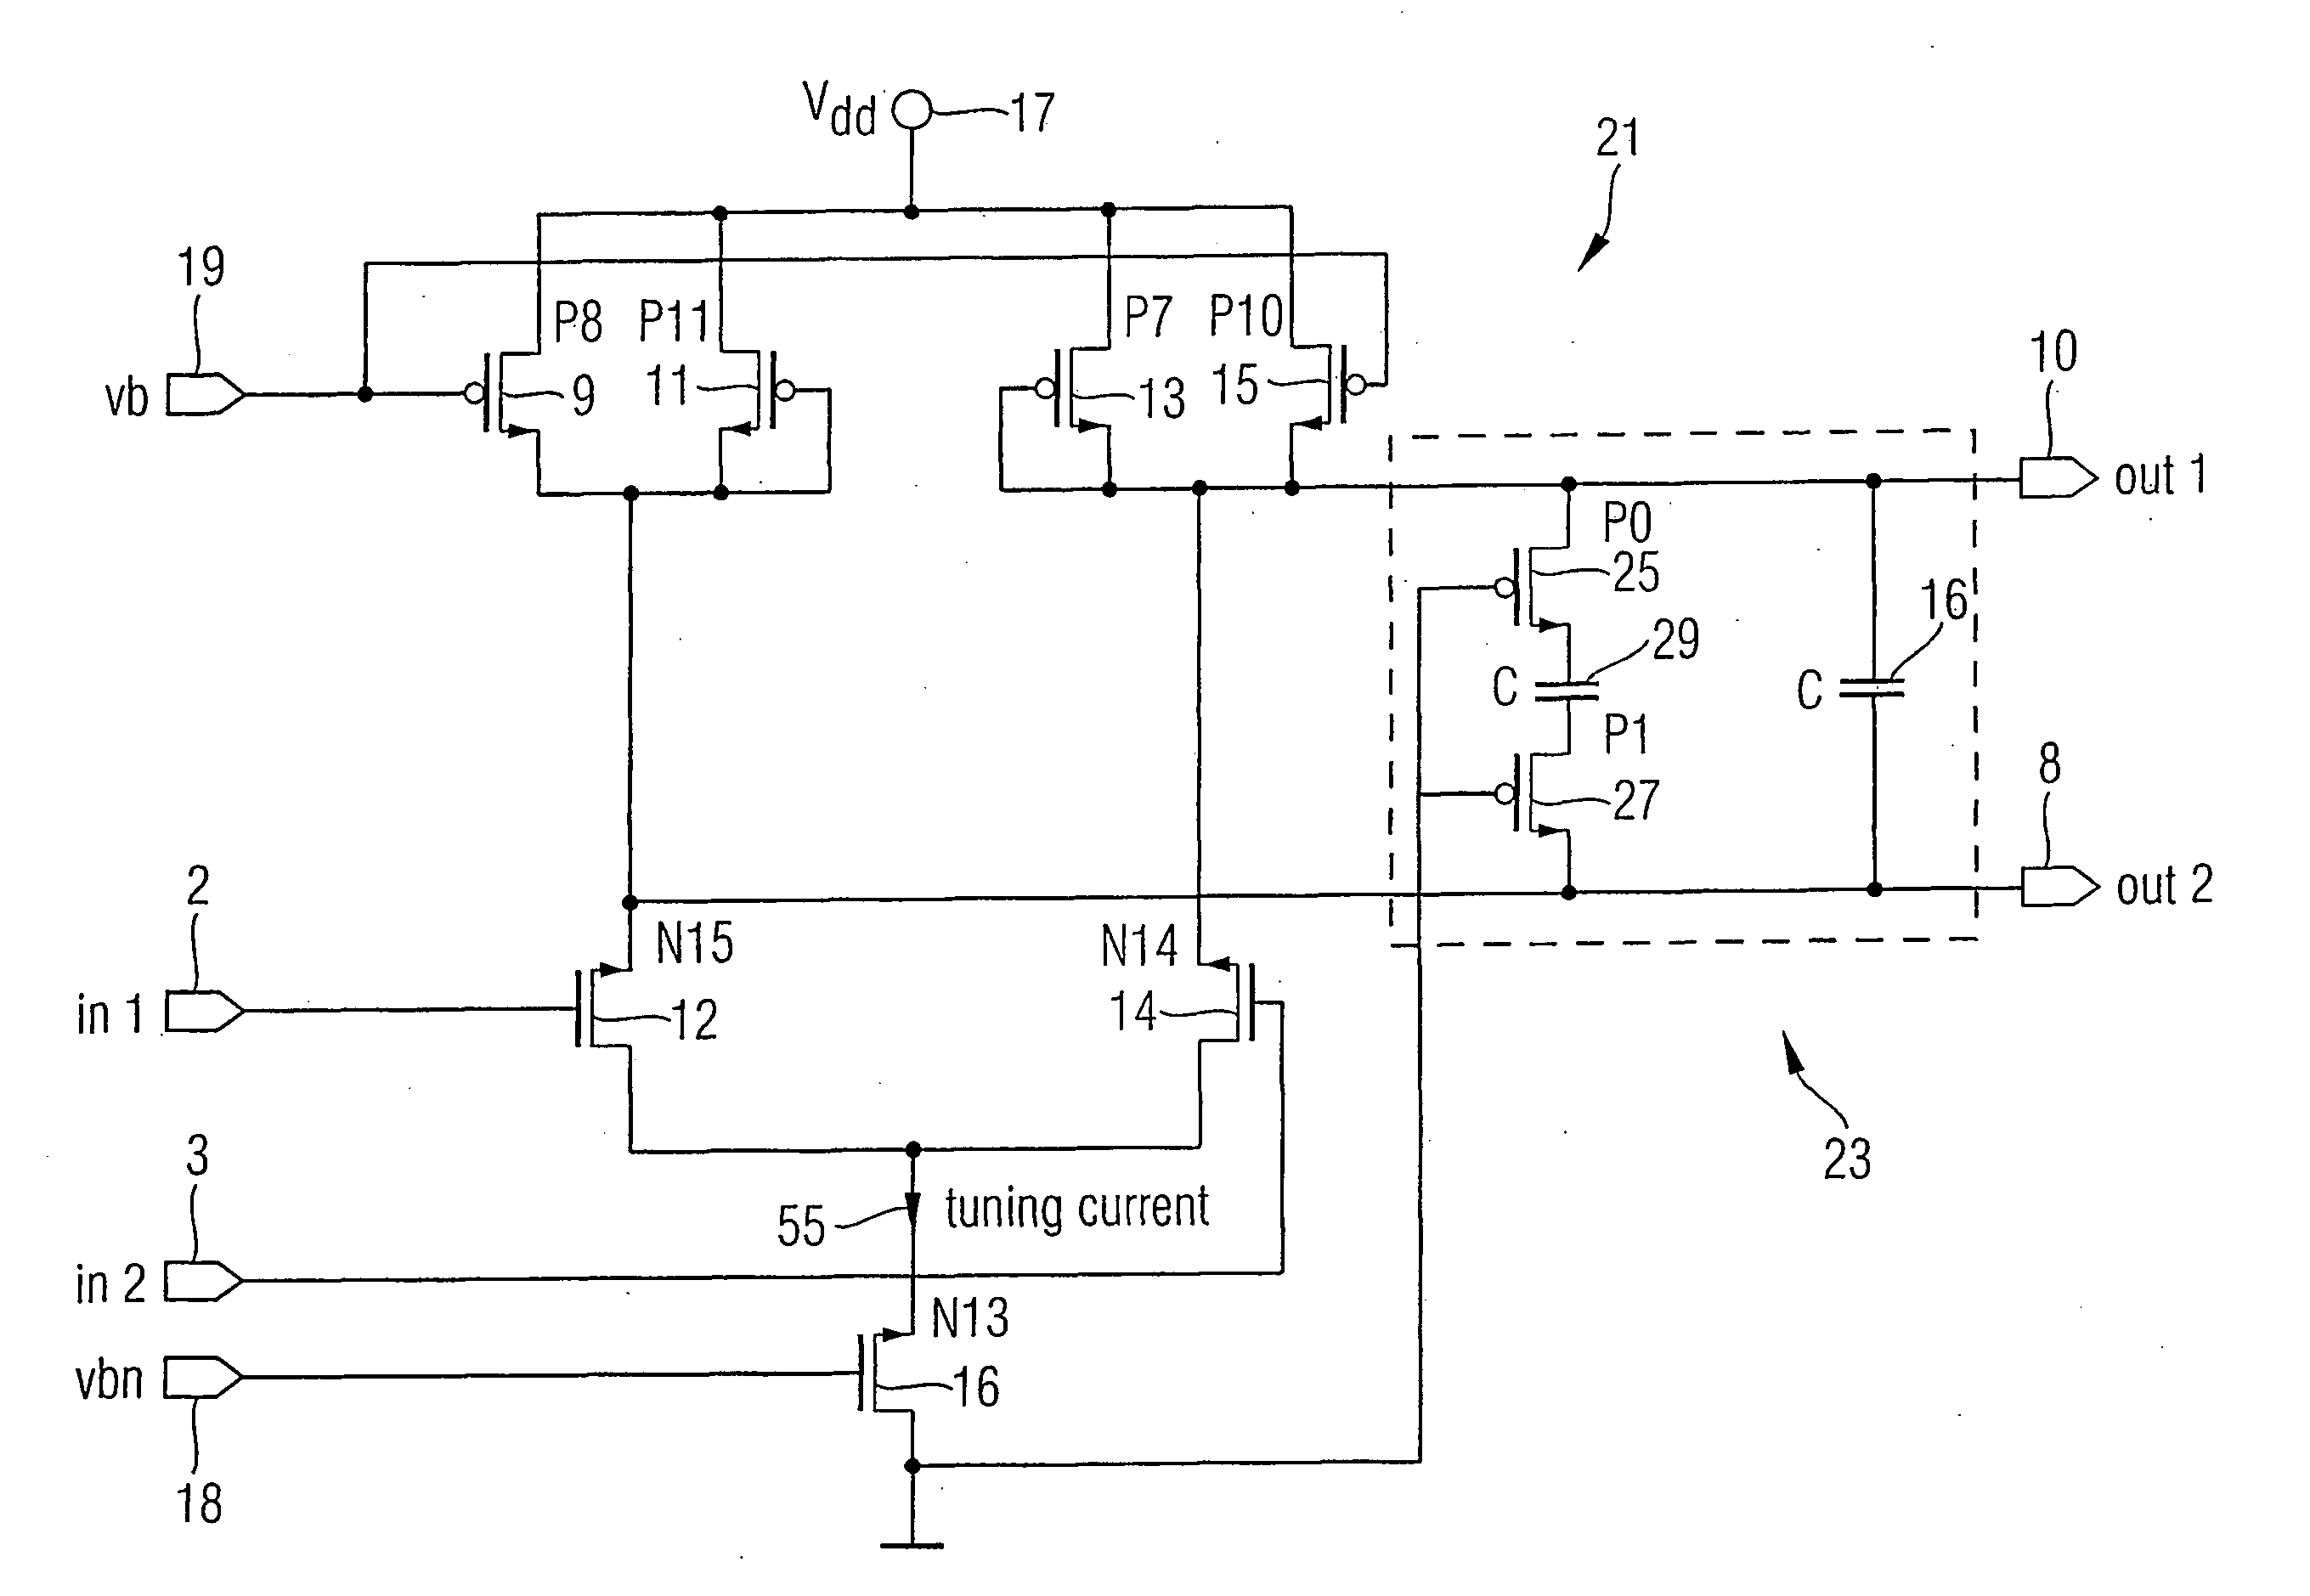 Current-controlled oscillator